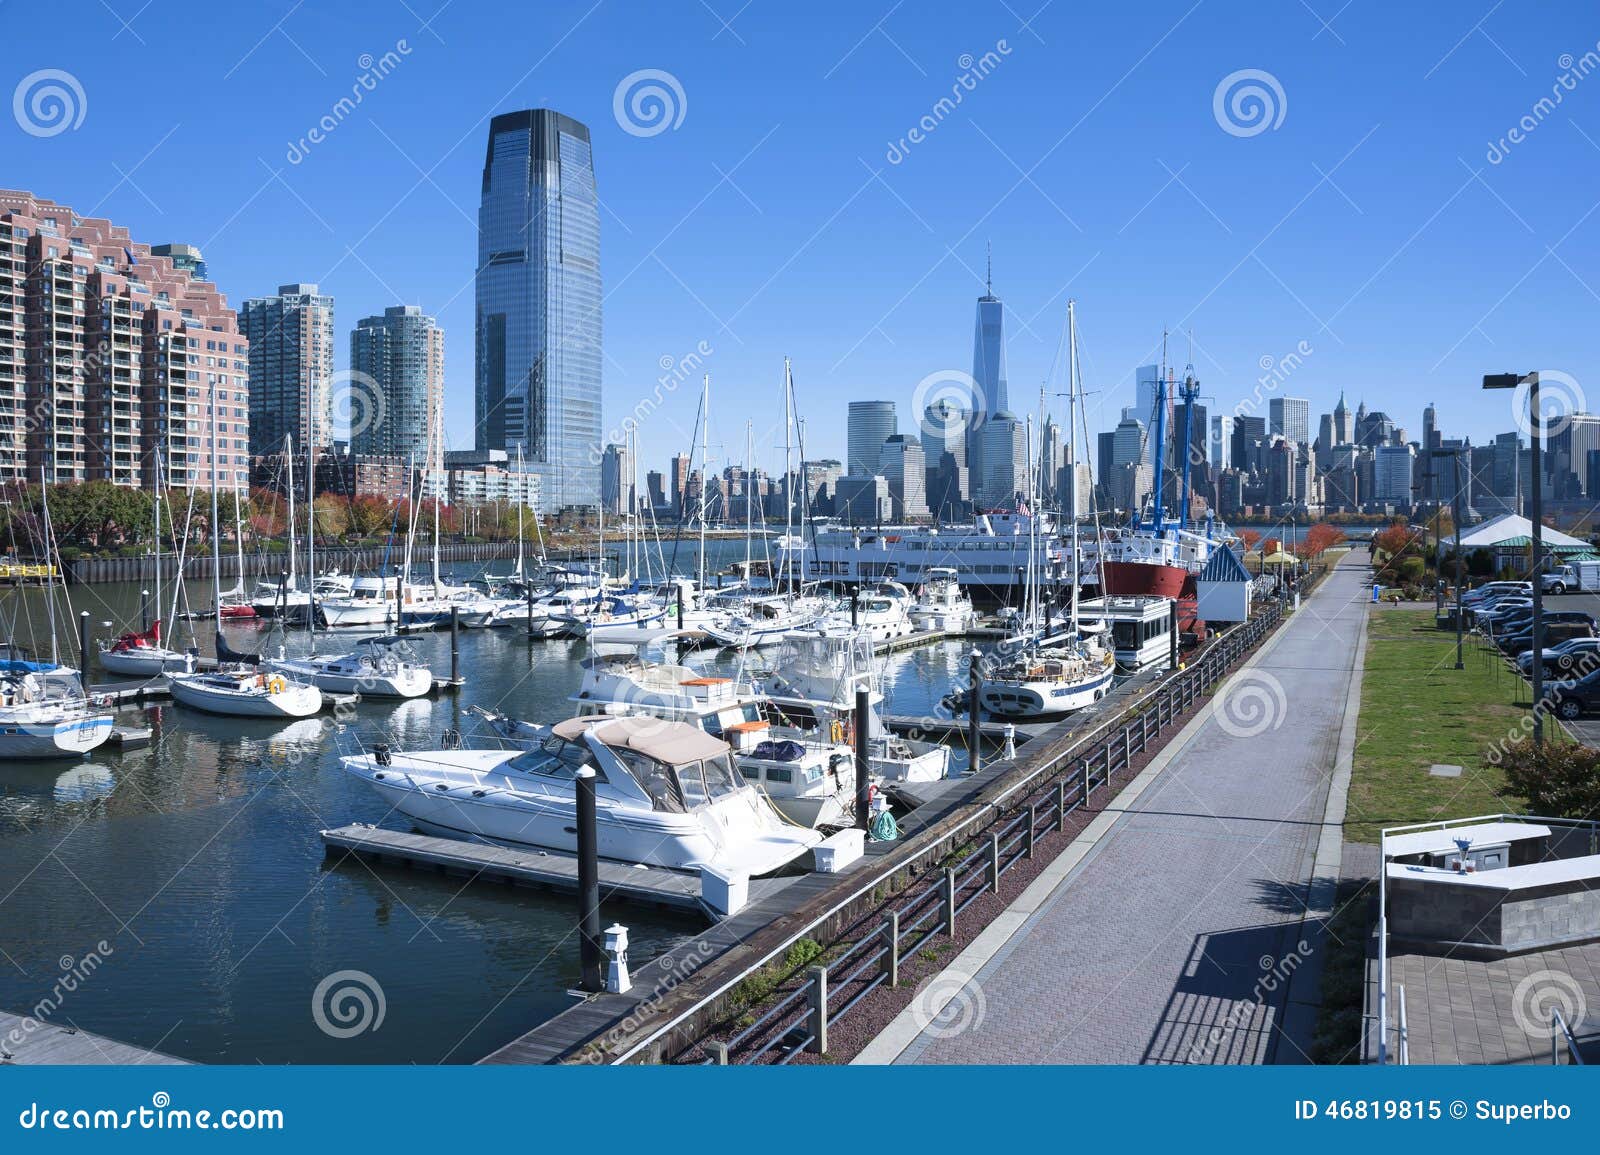 Liberty Harbor Marina New Jersey City Stock Image - Image of marina,  famous: 46819815